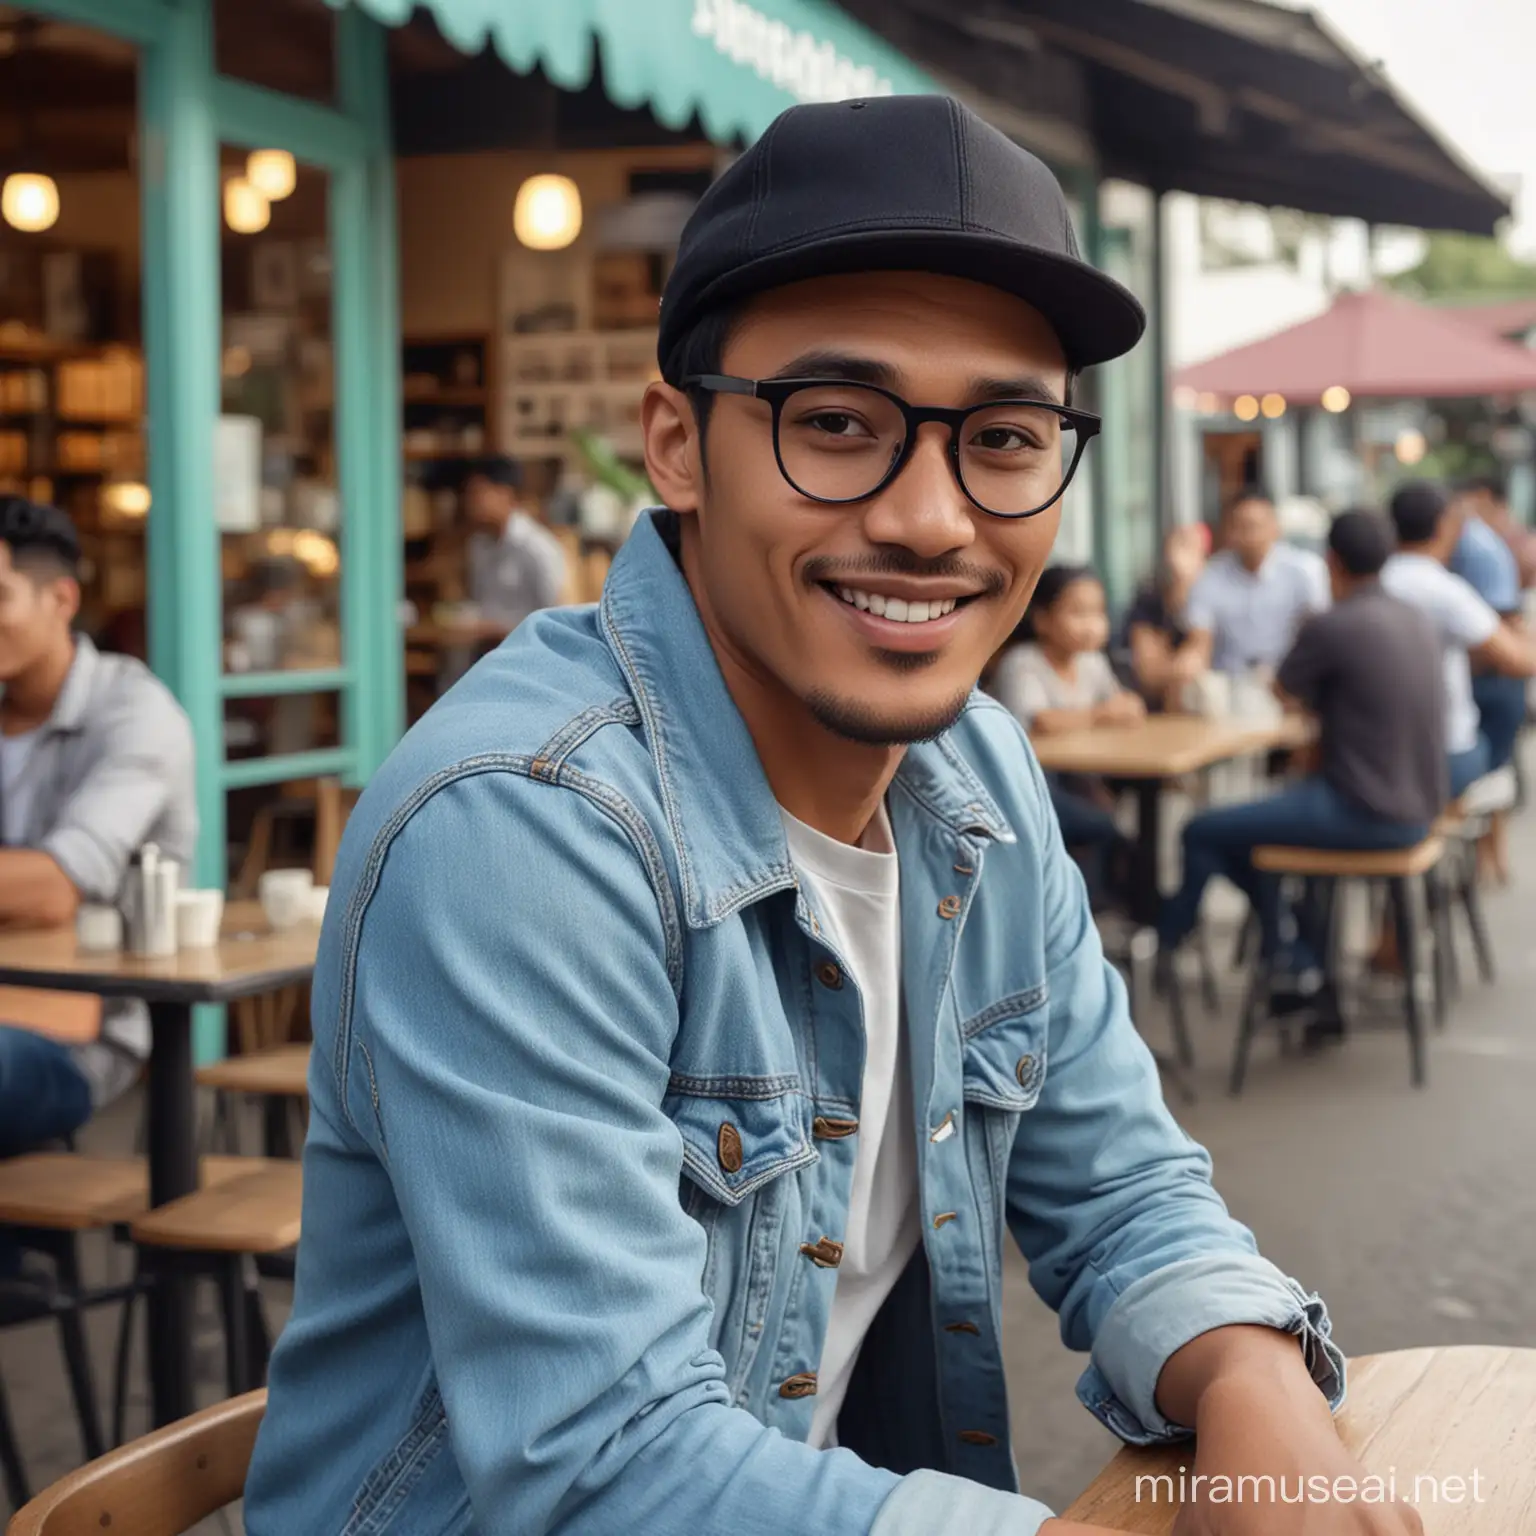 Seorang pria indonesia tampan dan bersih berusia 30 tahun, memakai dad hat kaca mata pantos hitam ,berwajah ramah memakai jaket jeans biru muda,celana jeans.,memandang ke kamera, di warung kopi pinggir jalan, di latar belakang, beberapa orang duduk di belakang. gambar asli seperti ultra HD 8K asli